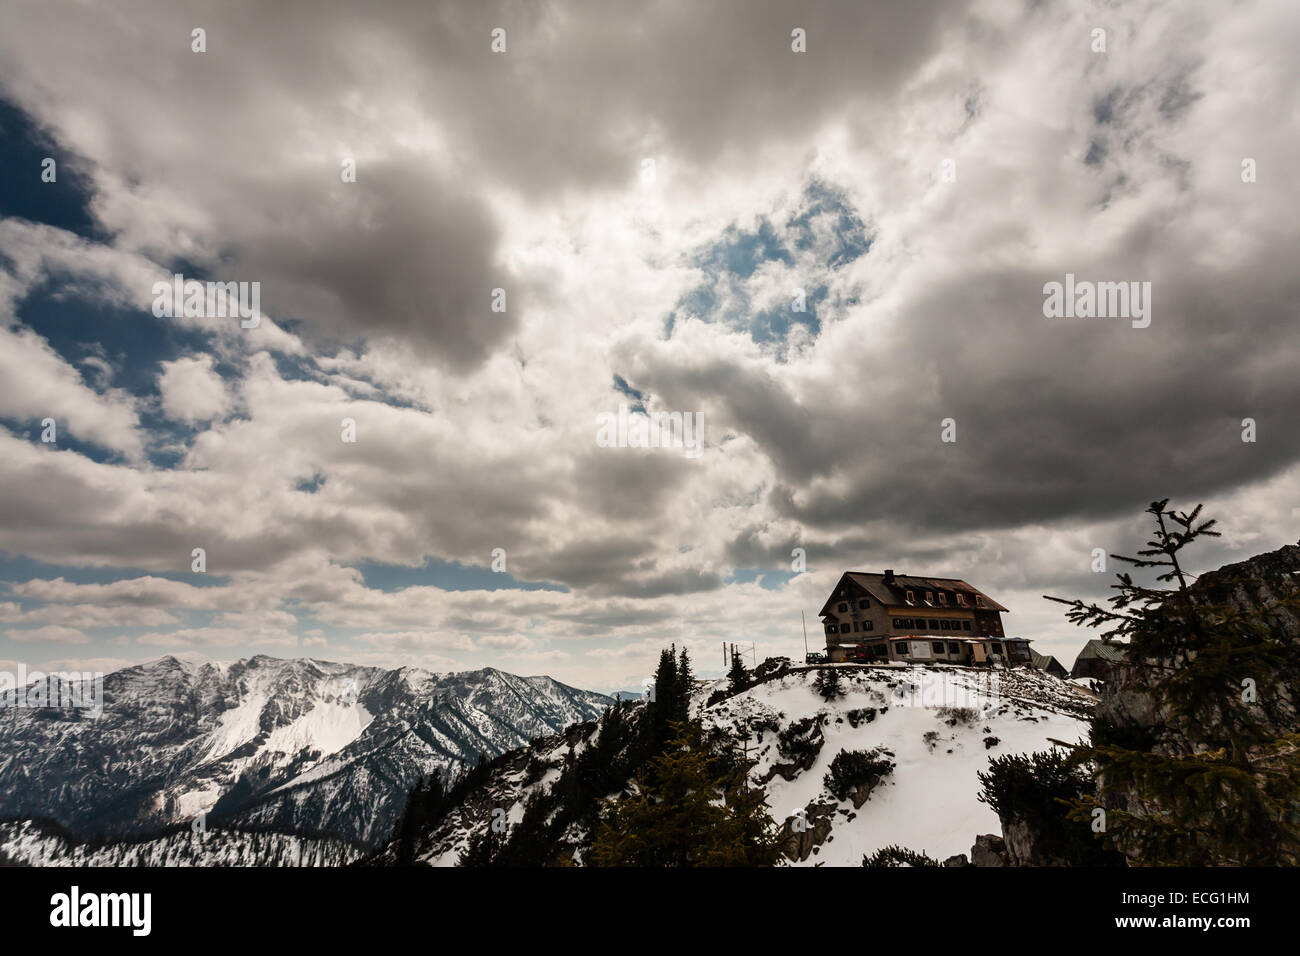 Neuhaus, a mountain lodge near the summit of a mountain called Rotwand, in the Bavarian alps. Stock Photo